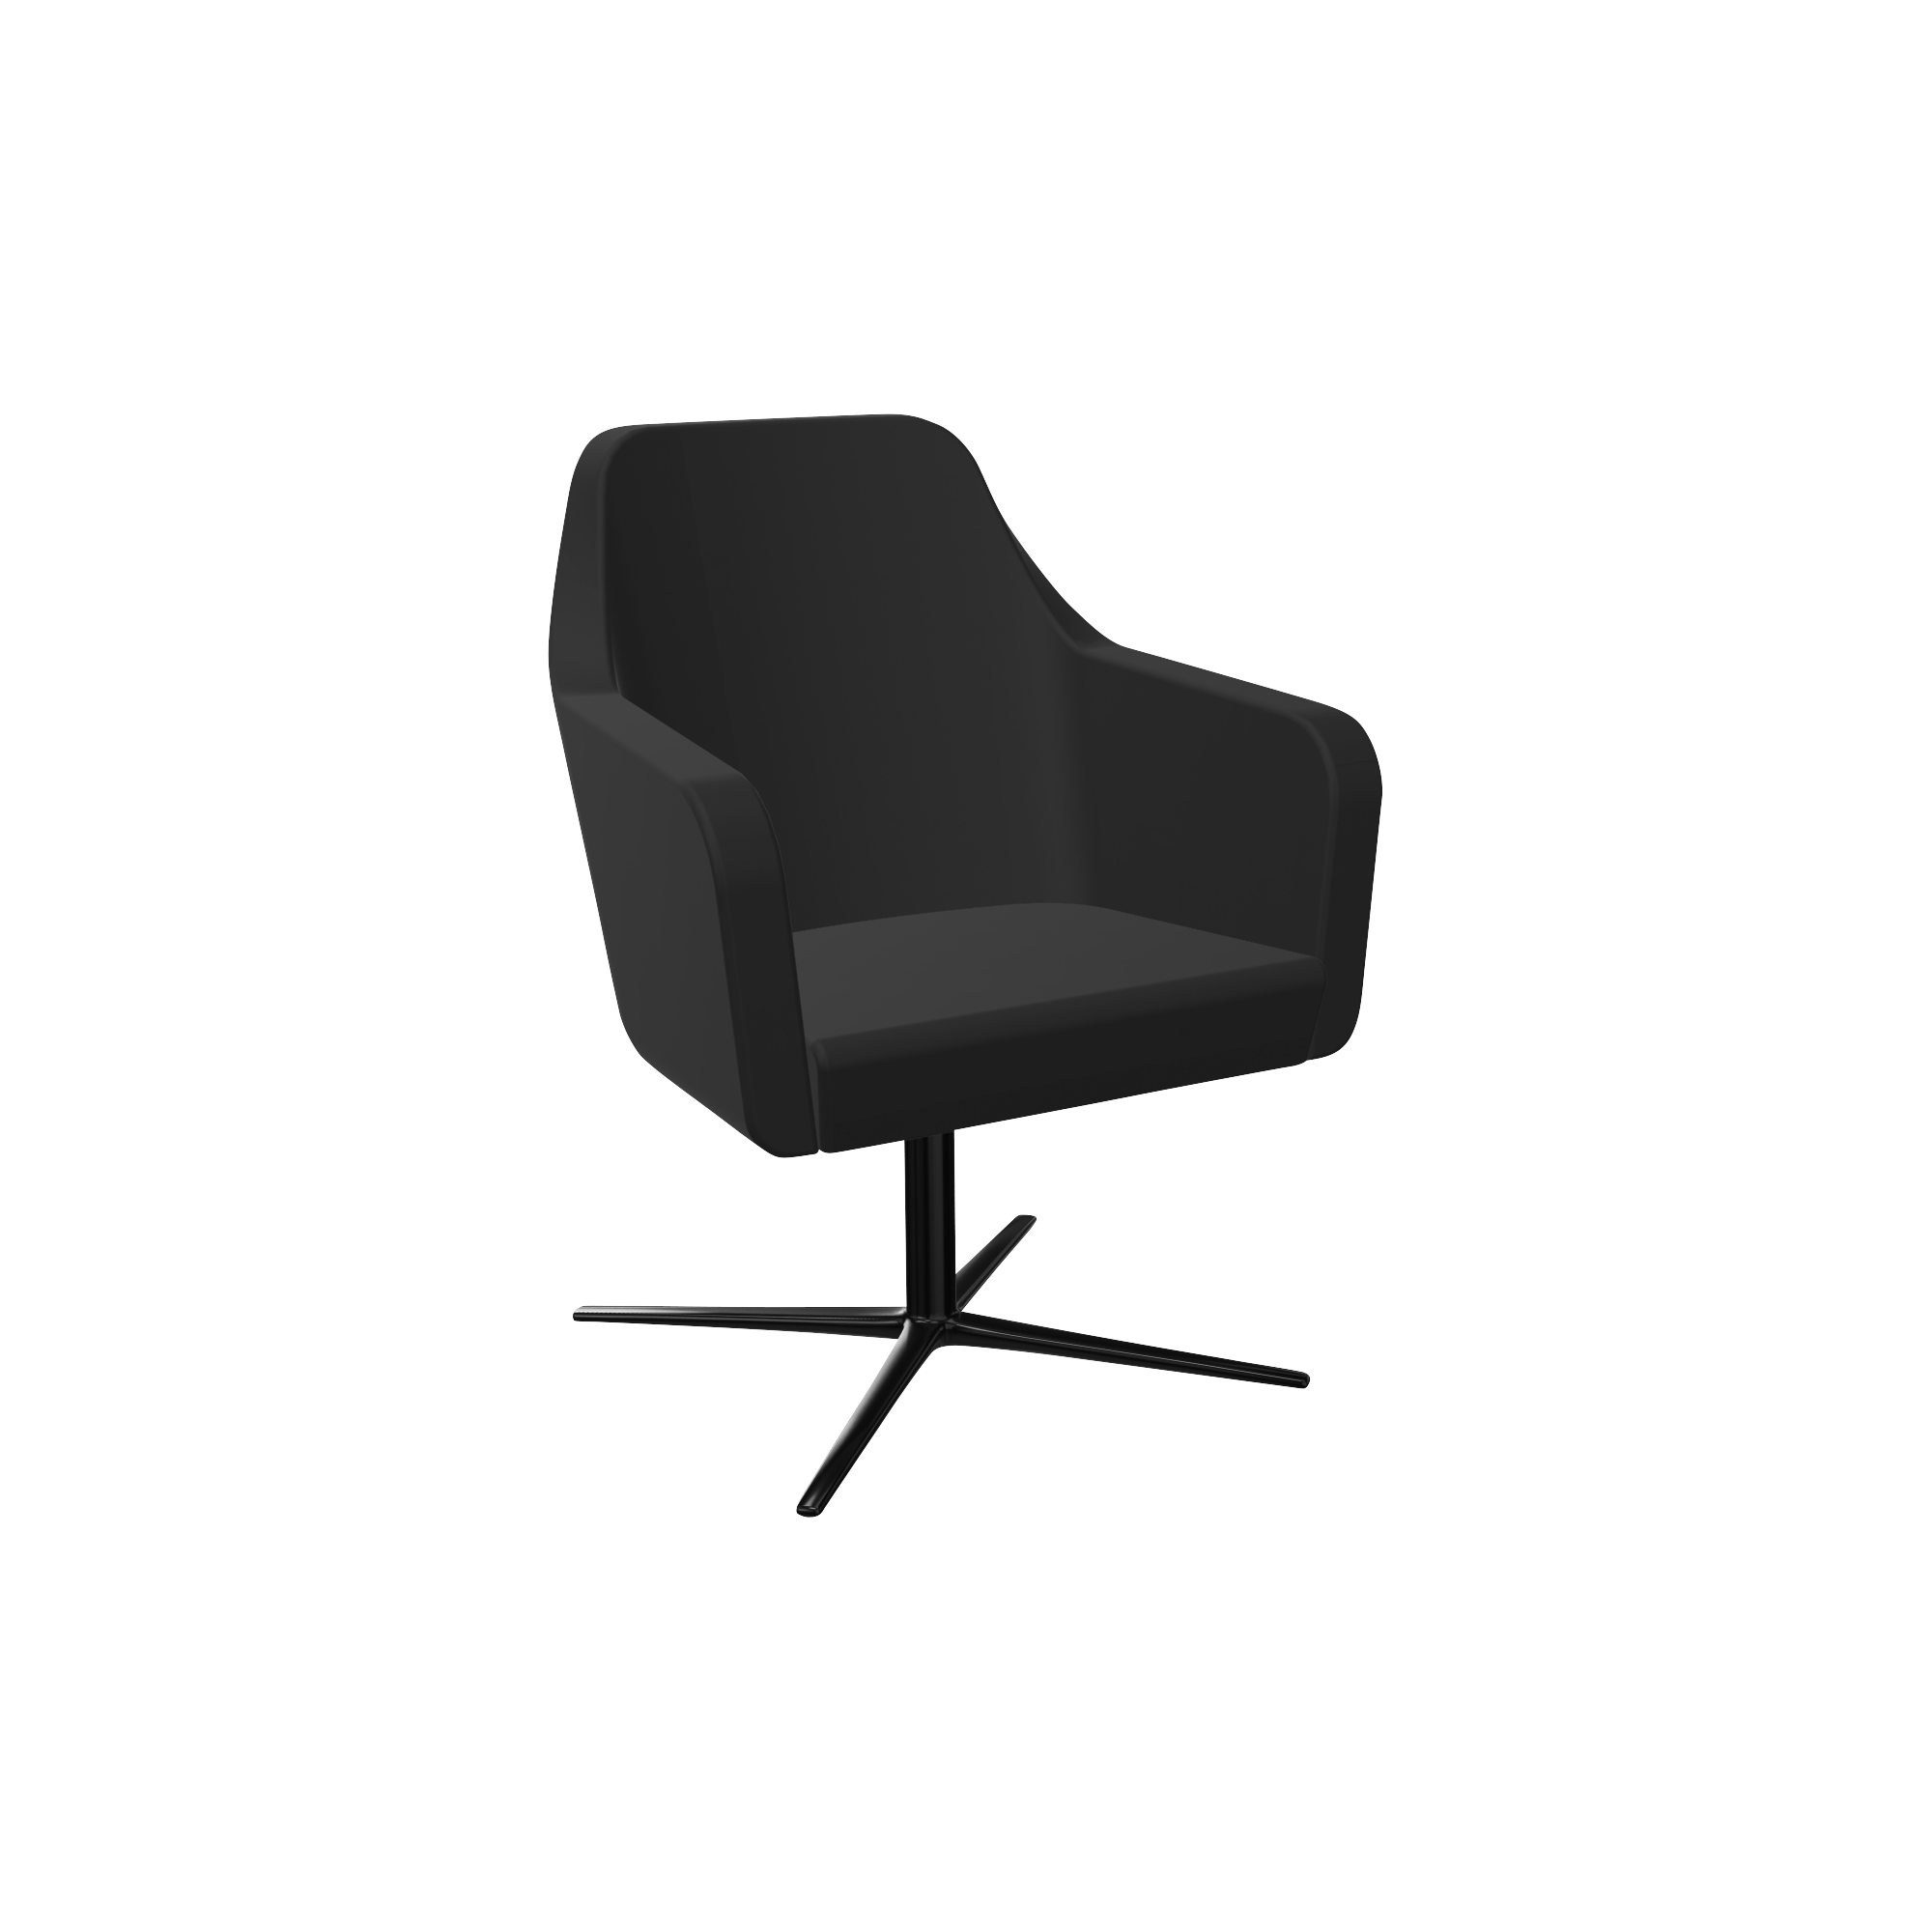 Black upholstered seat with pedestal black leg